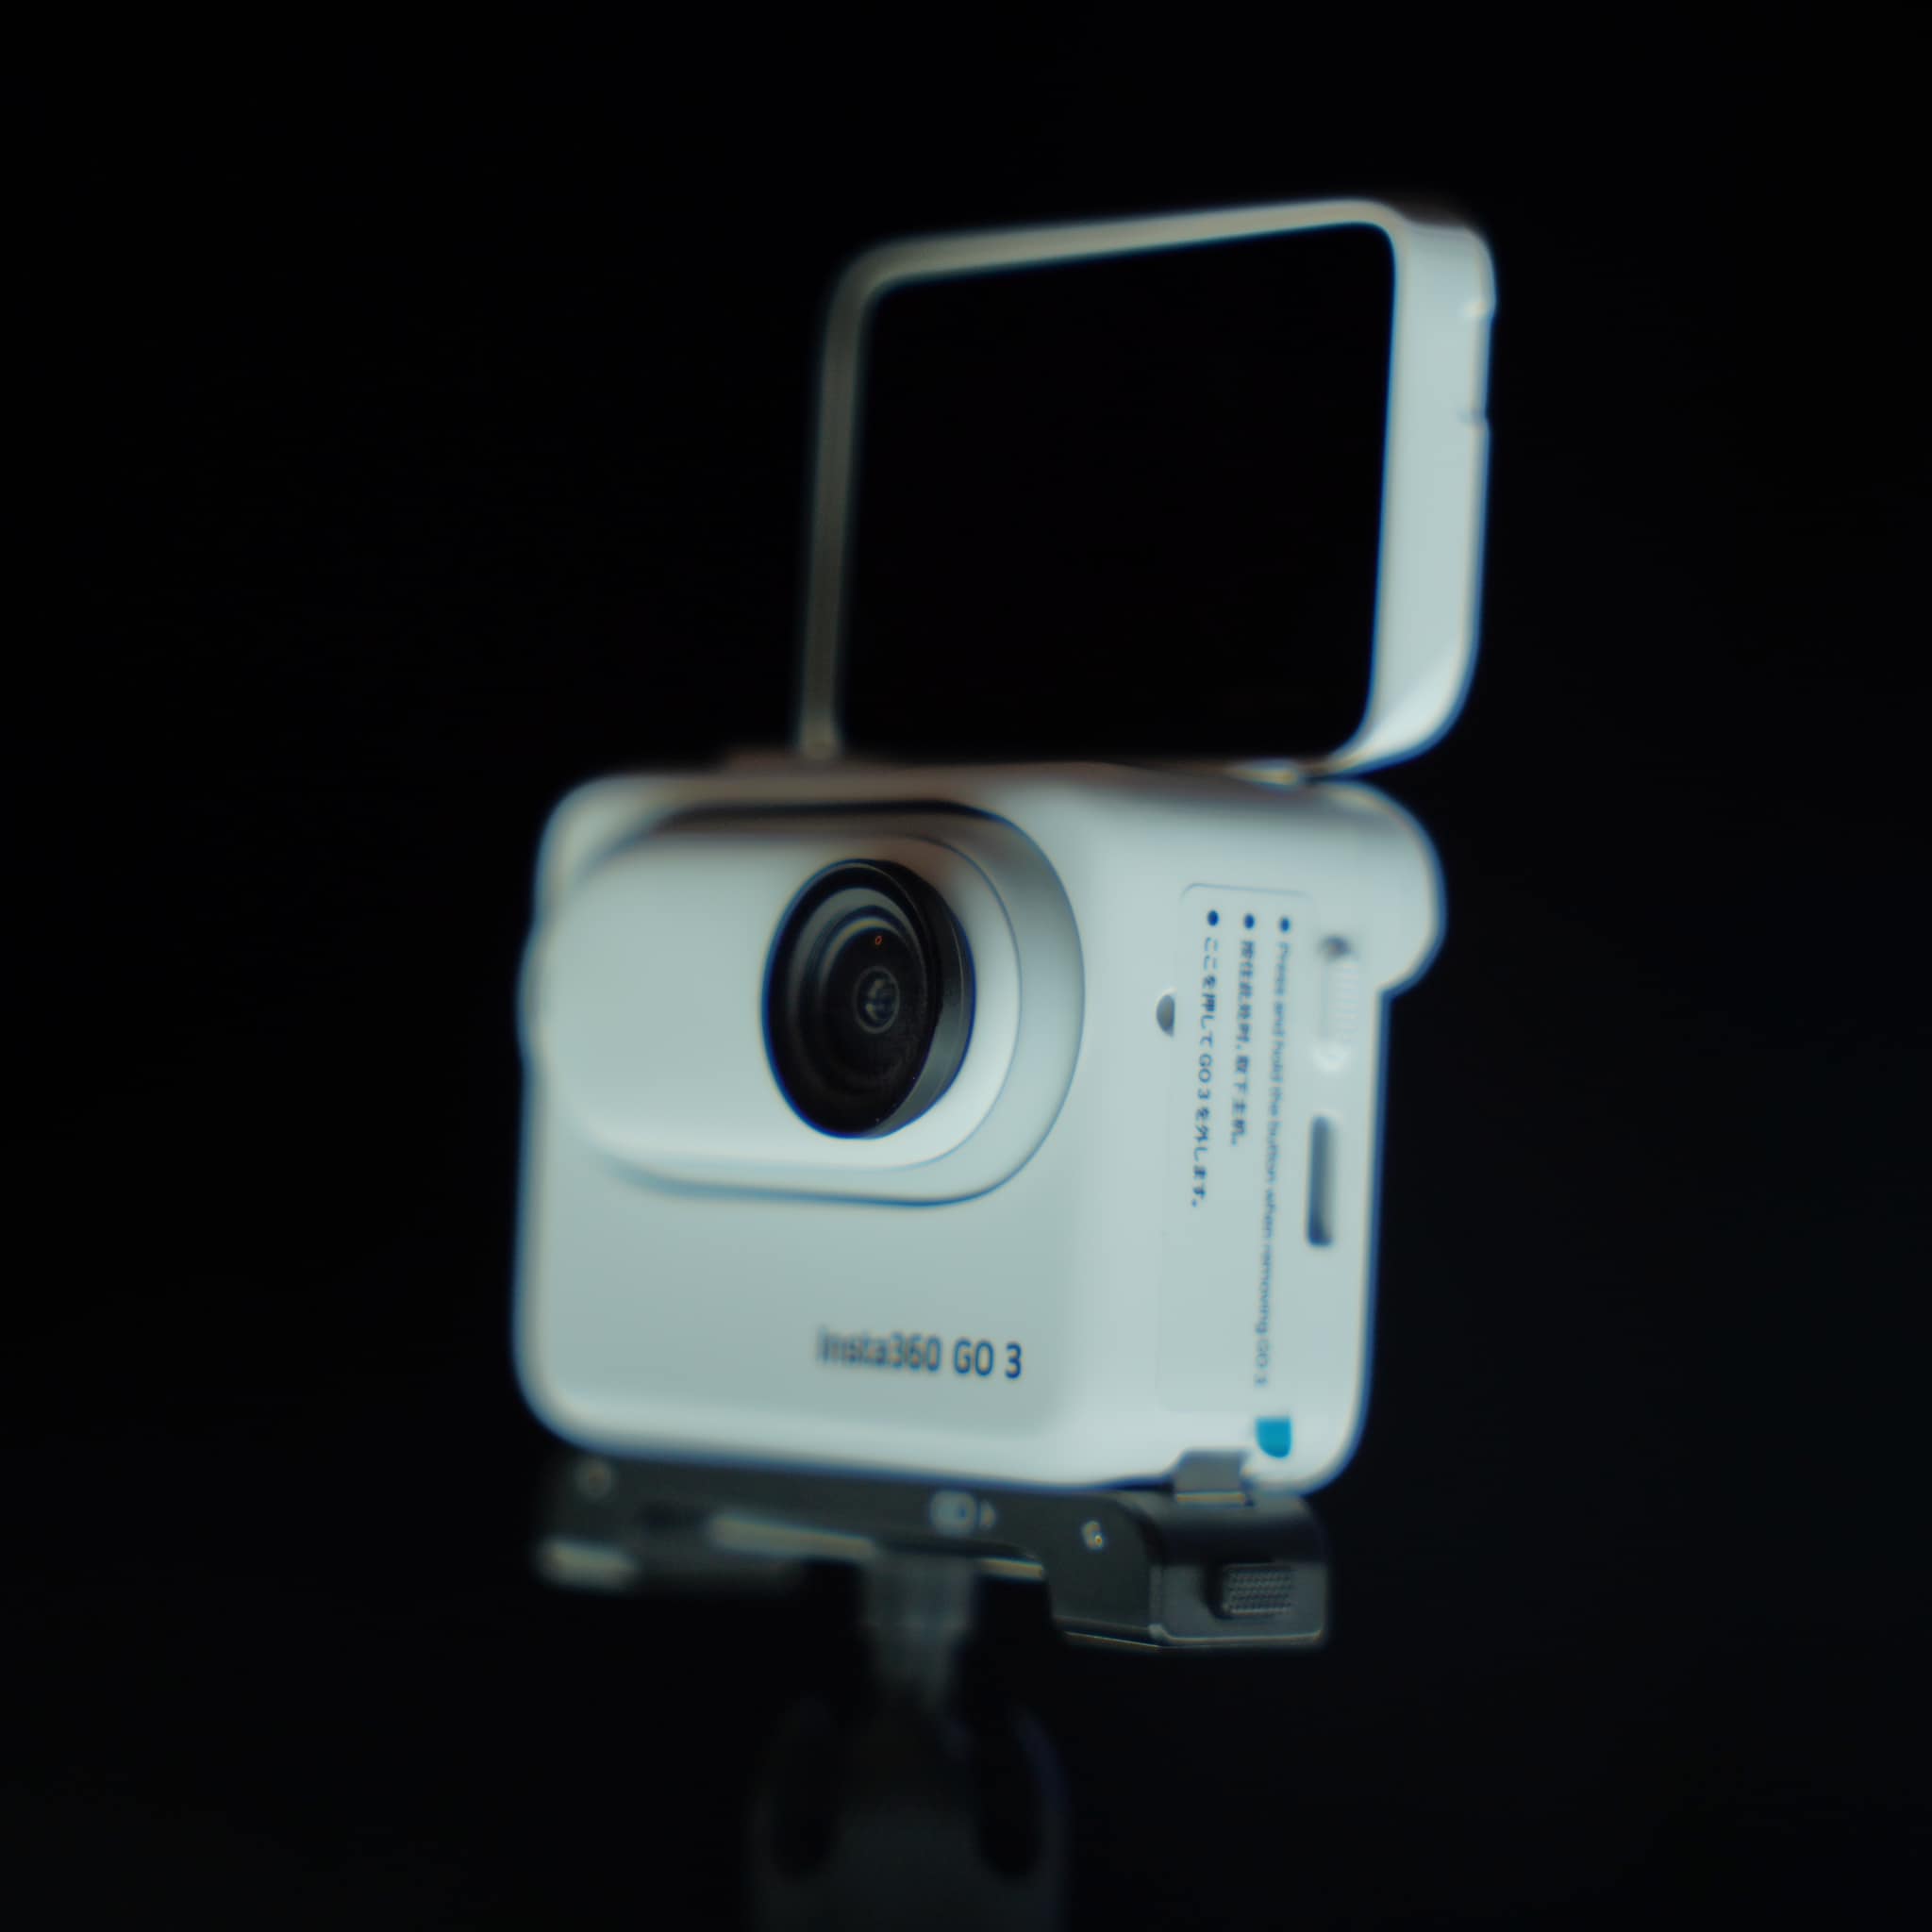 Insta360 Go 3 Action Camera 128GB - Urban Gadgets PH